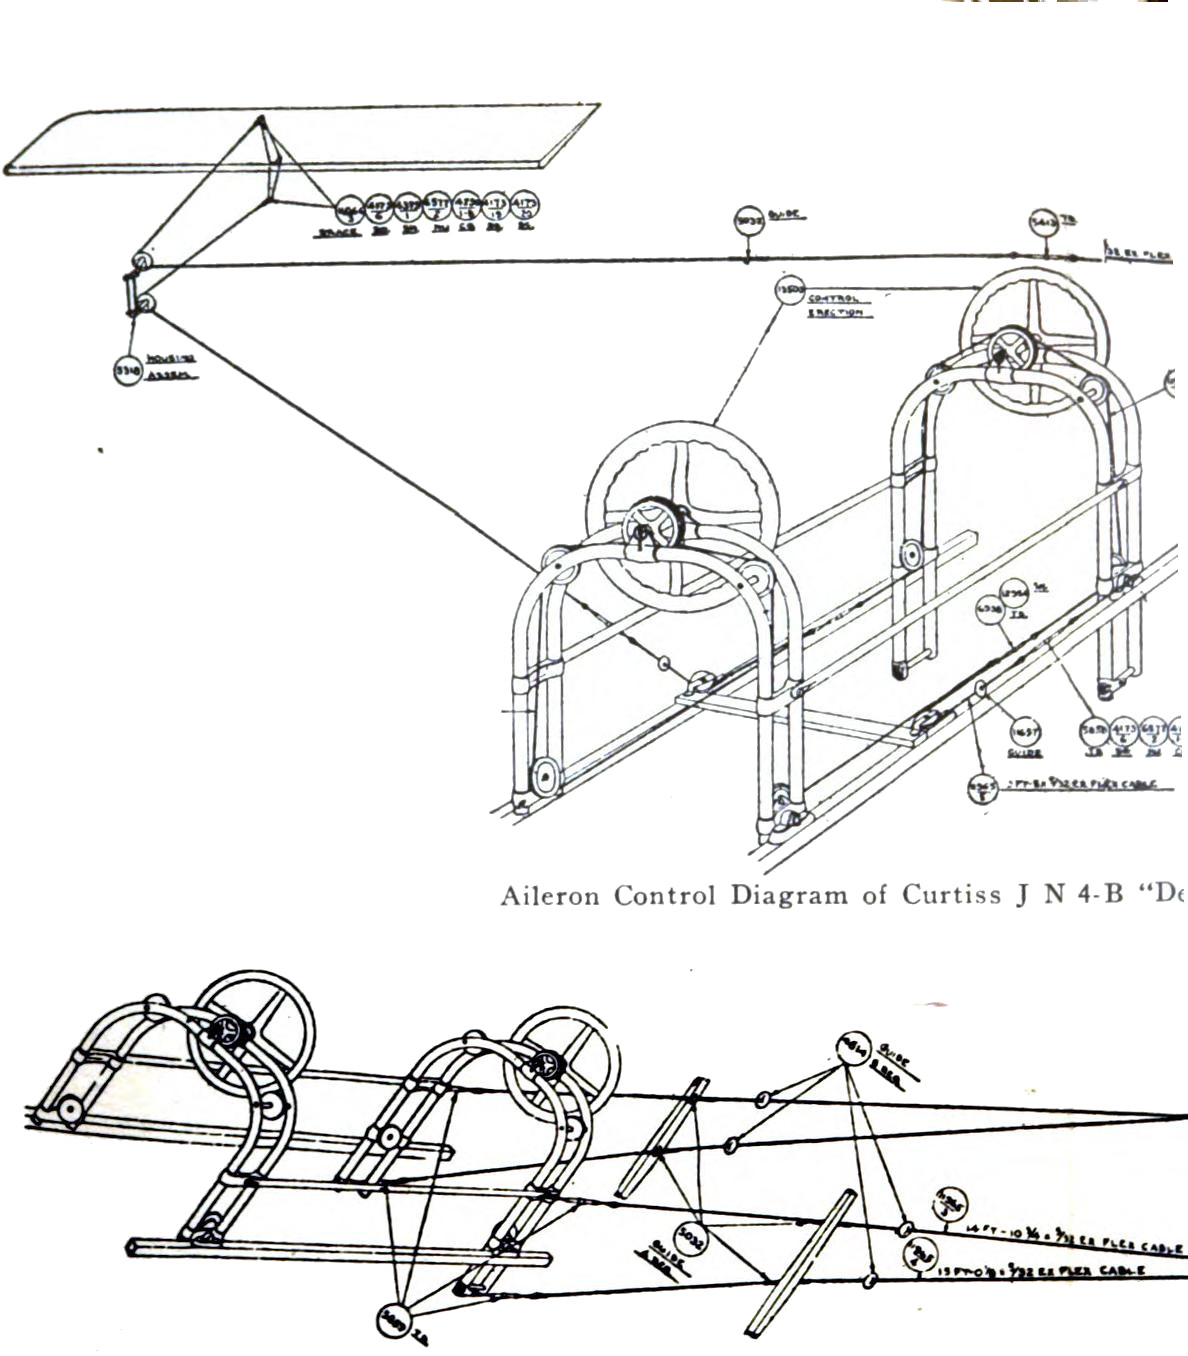 Aileron Control Diagram of Curtiss JN4-B.